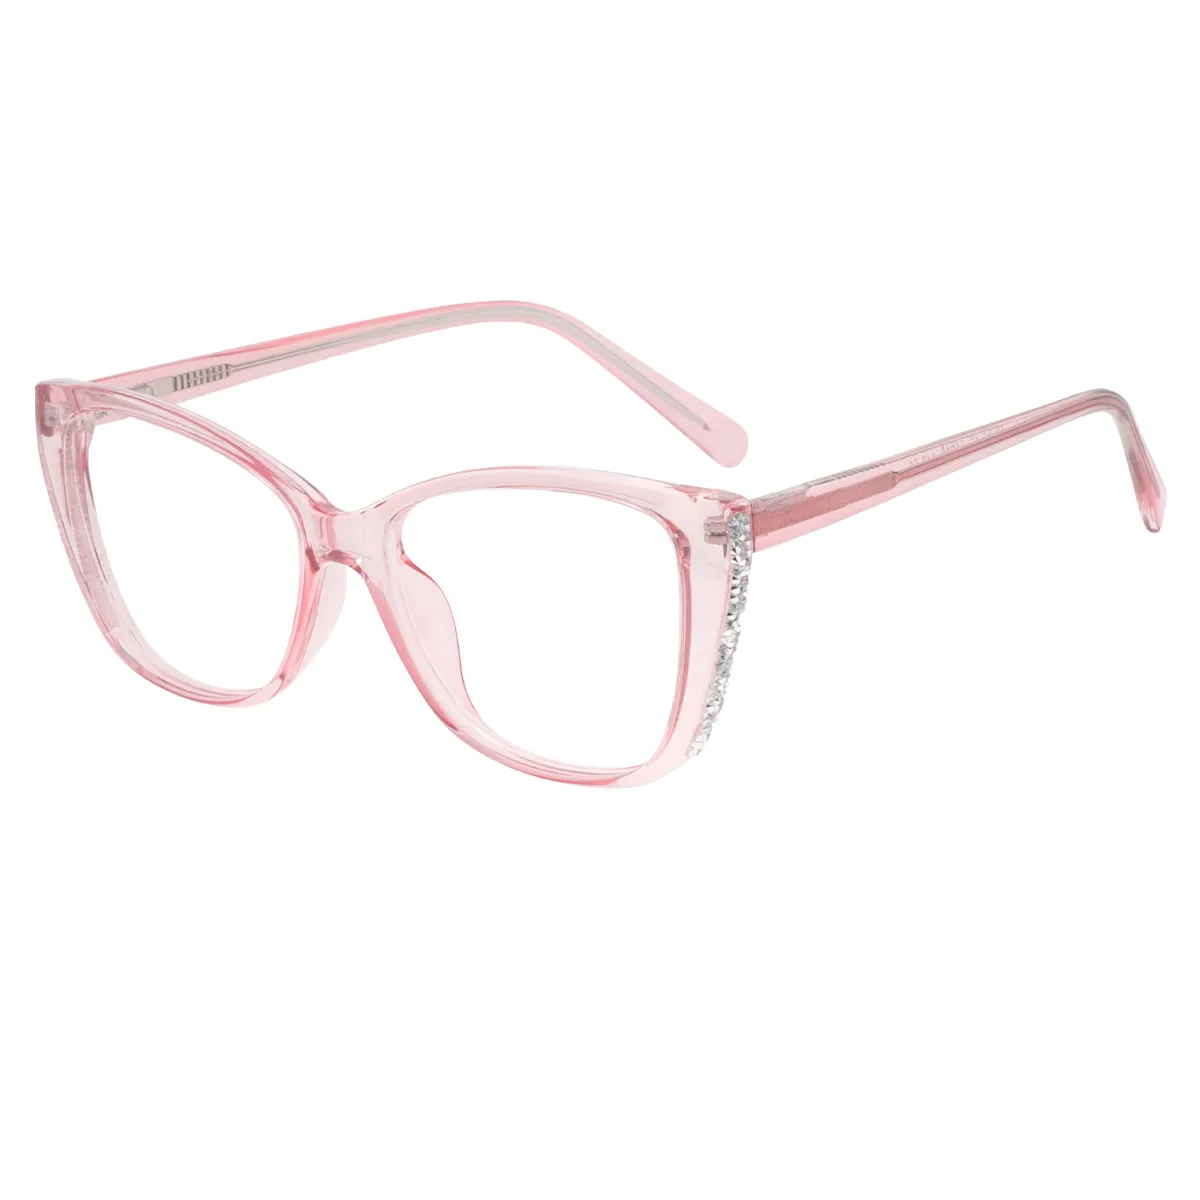 Georgia - Cat-eye Transparent-pink Glasses for Women - EFE